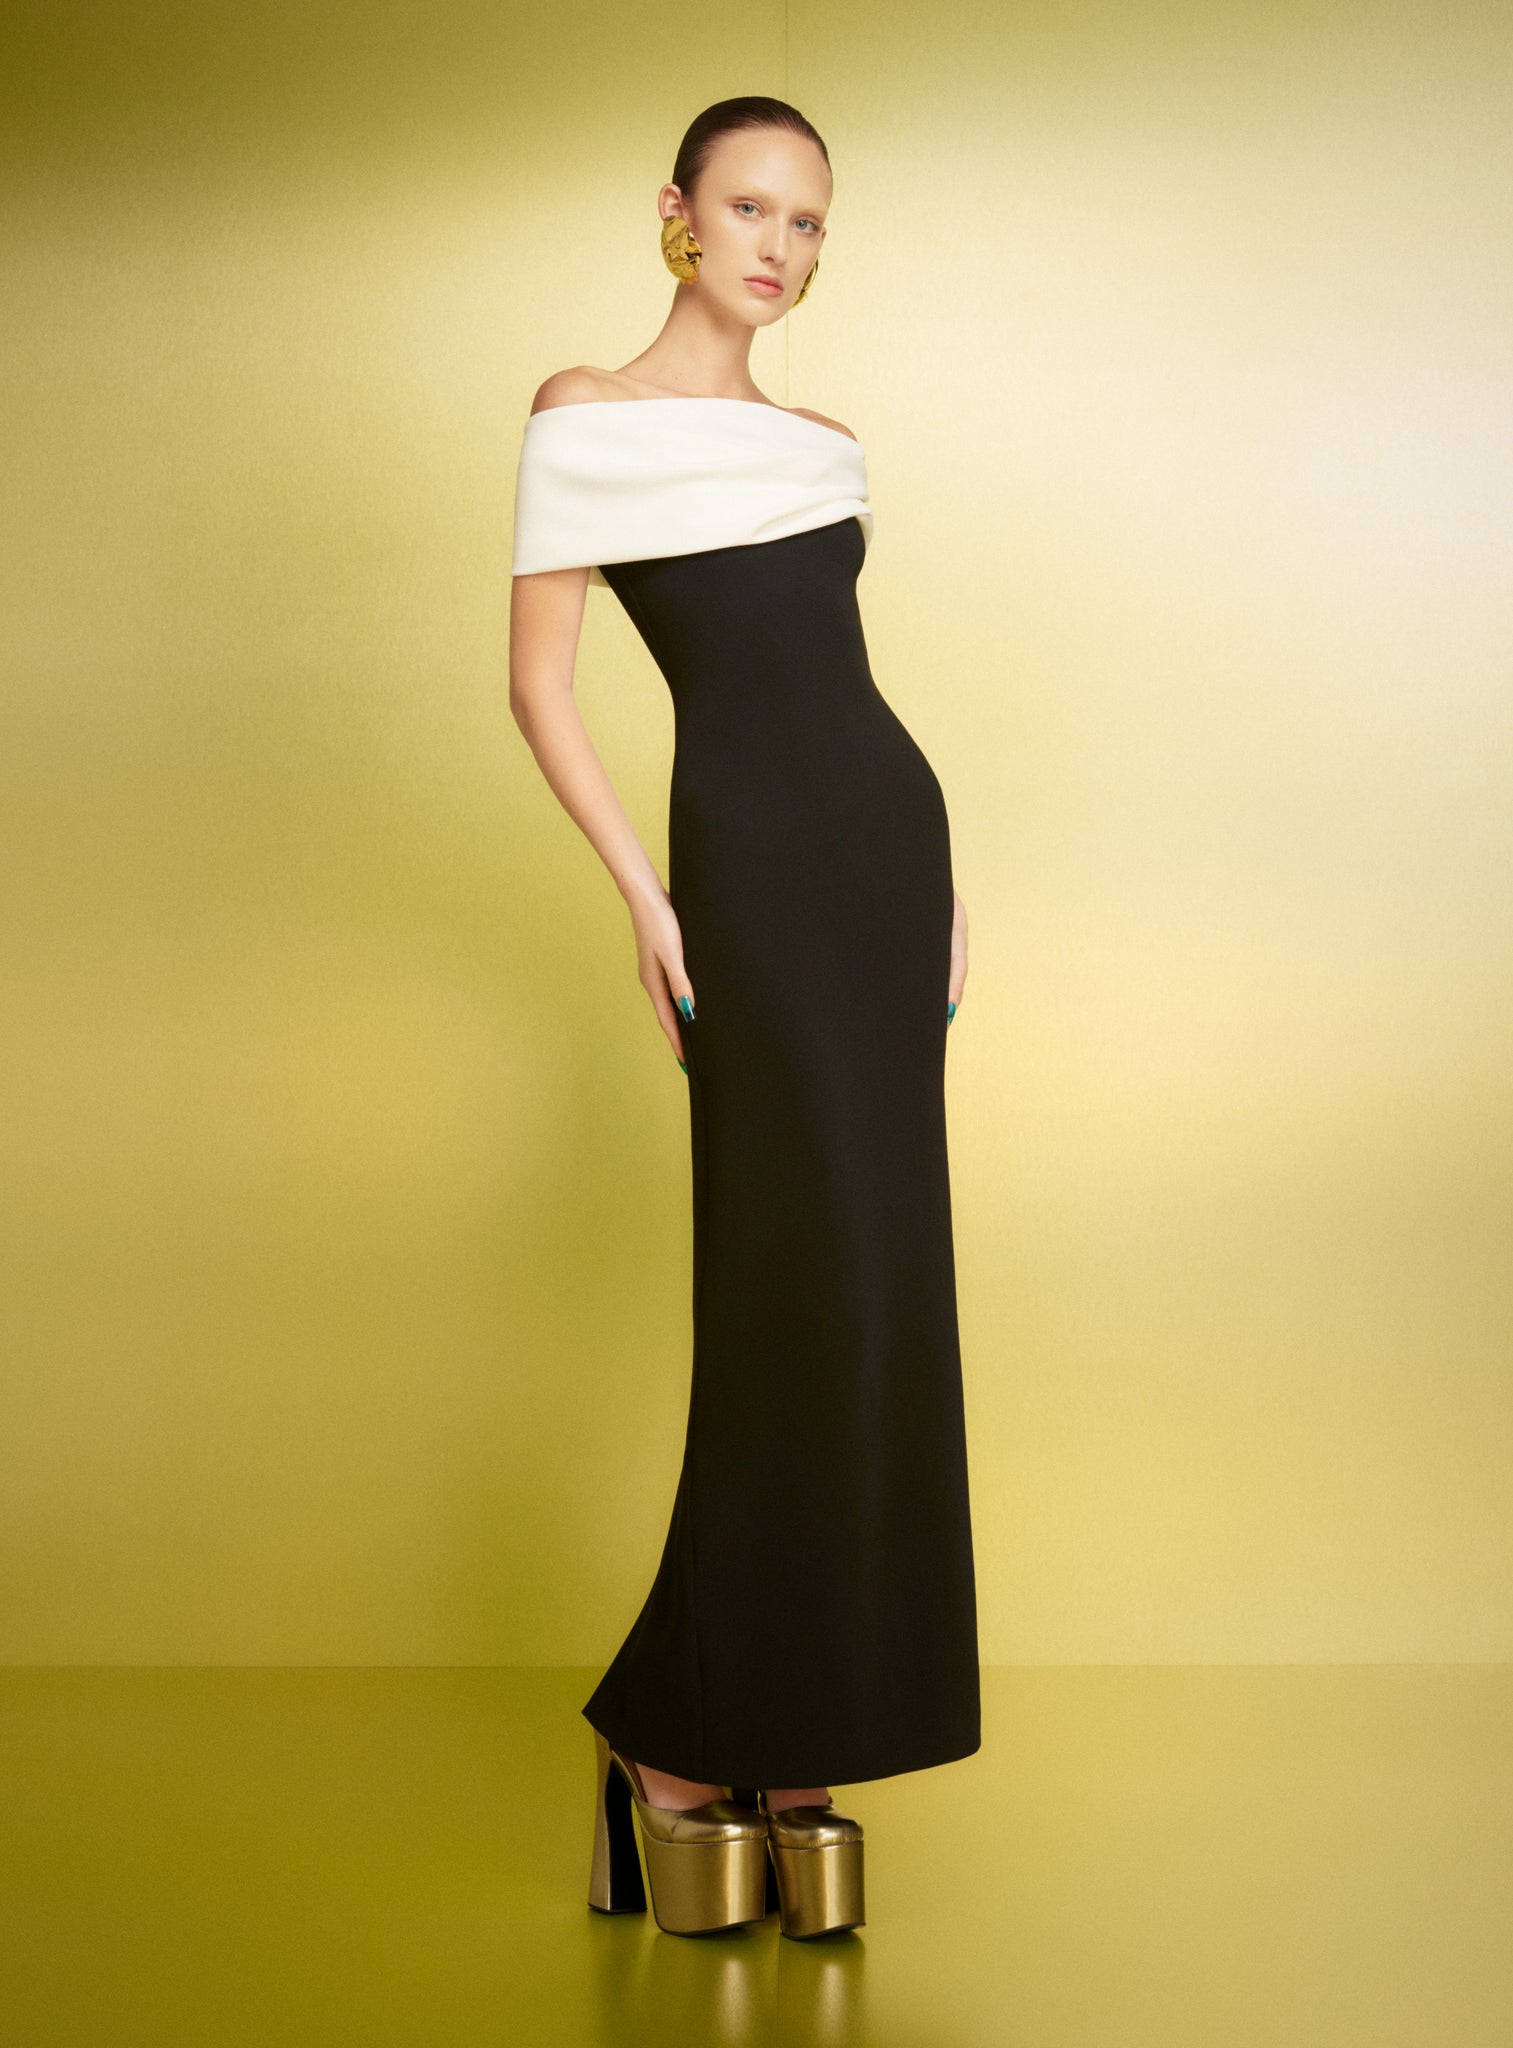 The Eva Maxi Dress in Cream and Black